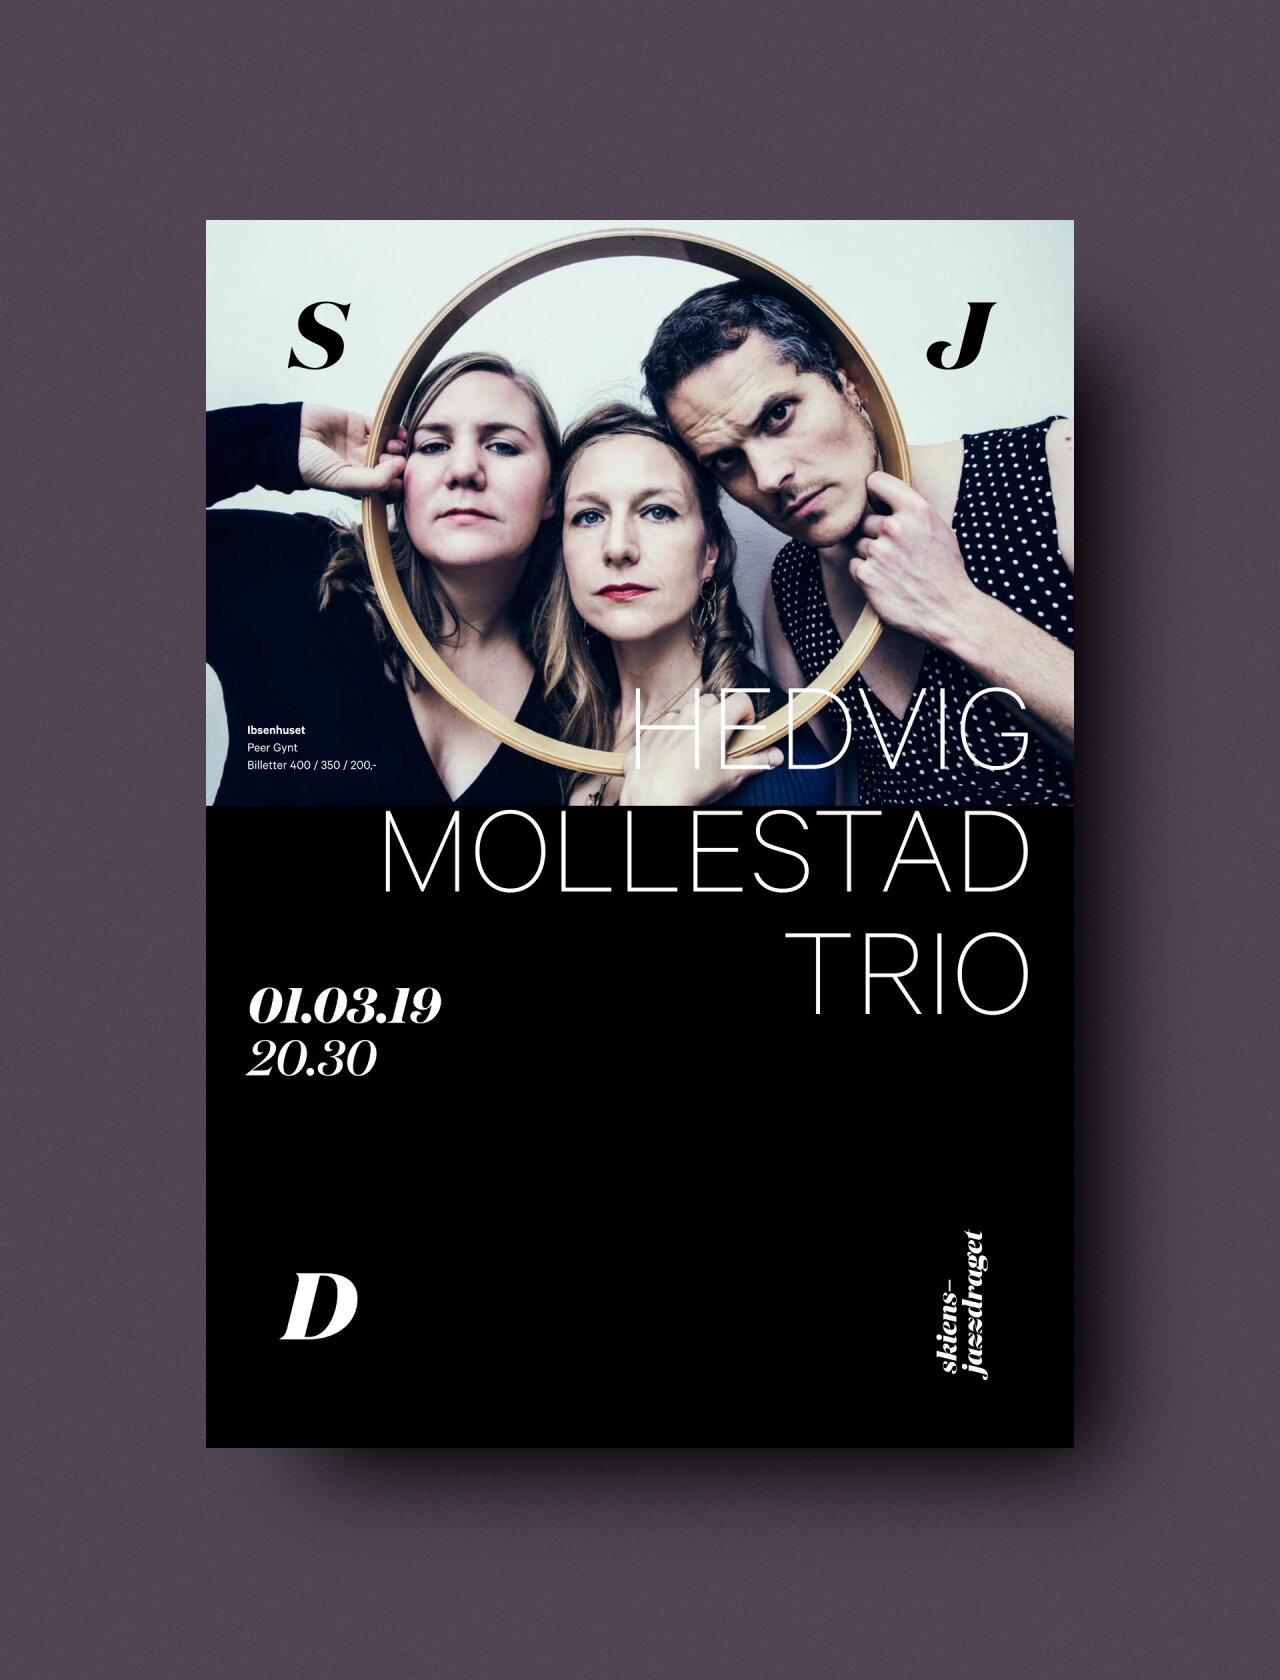 Plakat for Hedvig Mollestad Trio